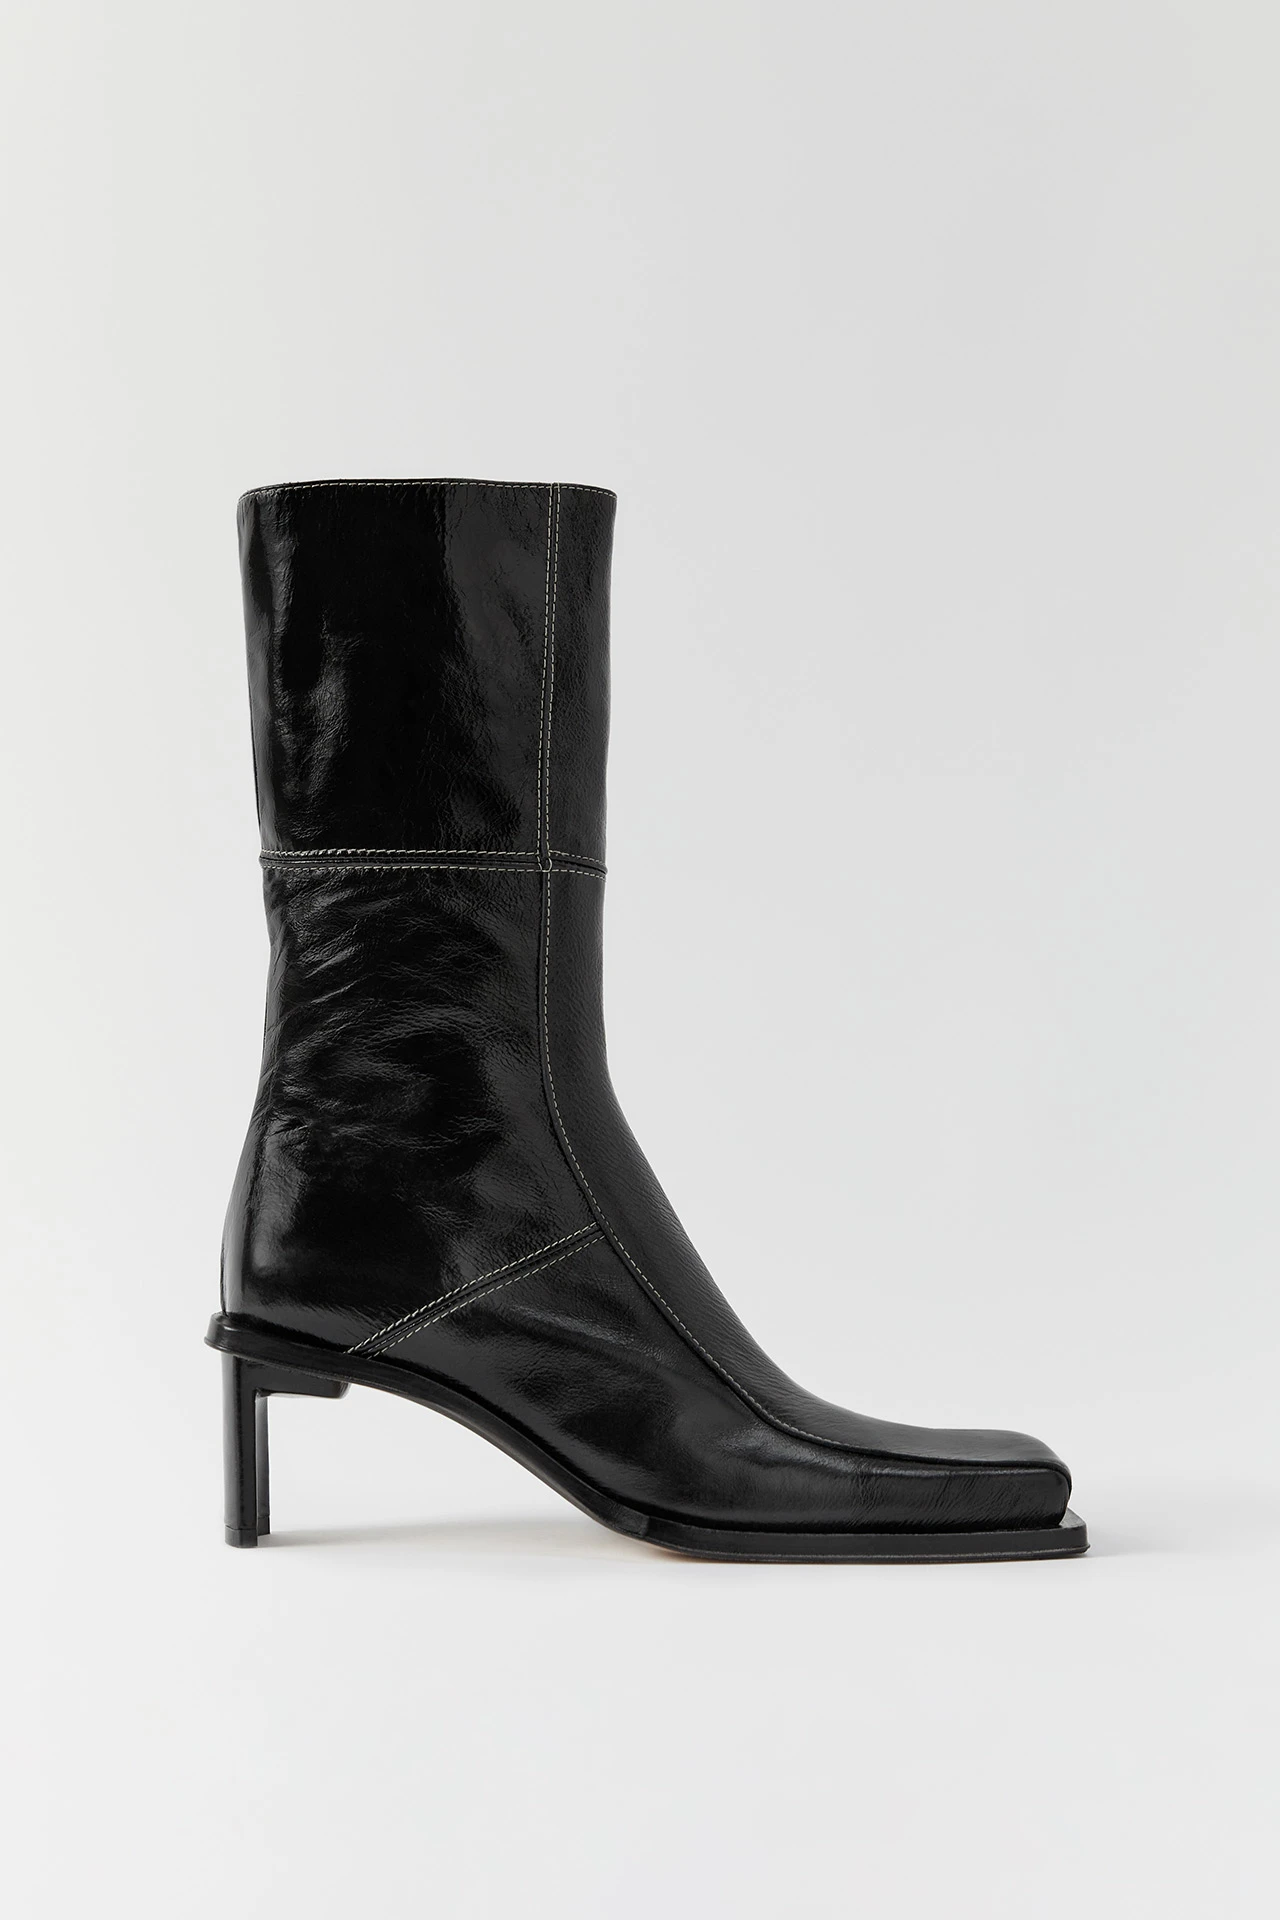 miista-amparo-black-boots-1